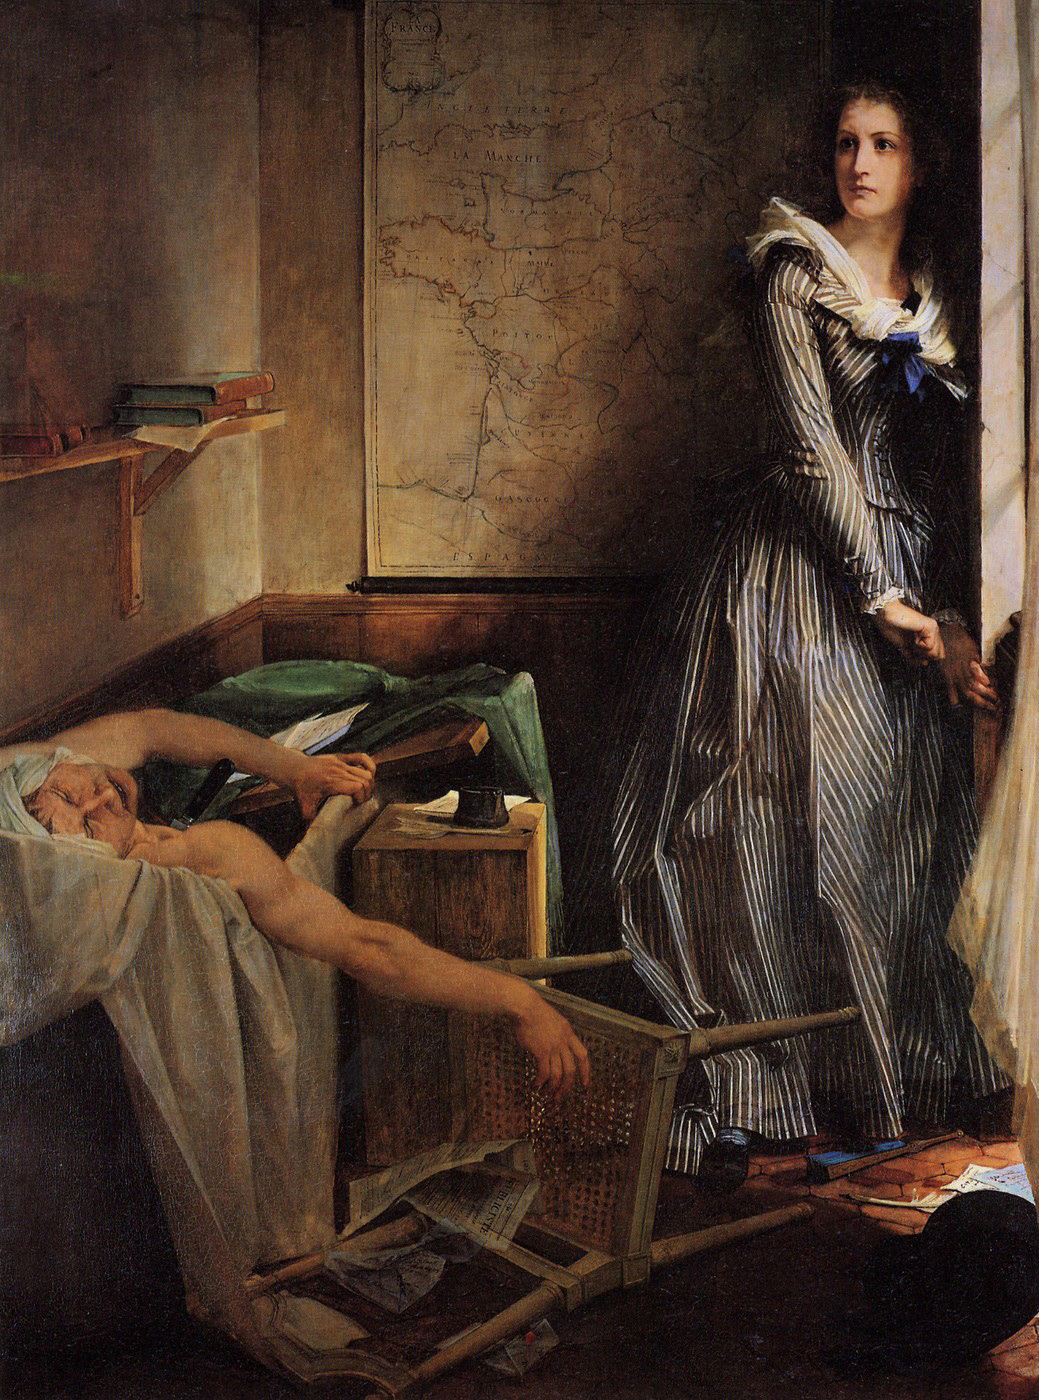 夏洛特·科黛(Charlotte Corday) by Paul Baudry - 1860 - 203 × 154 cm 